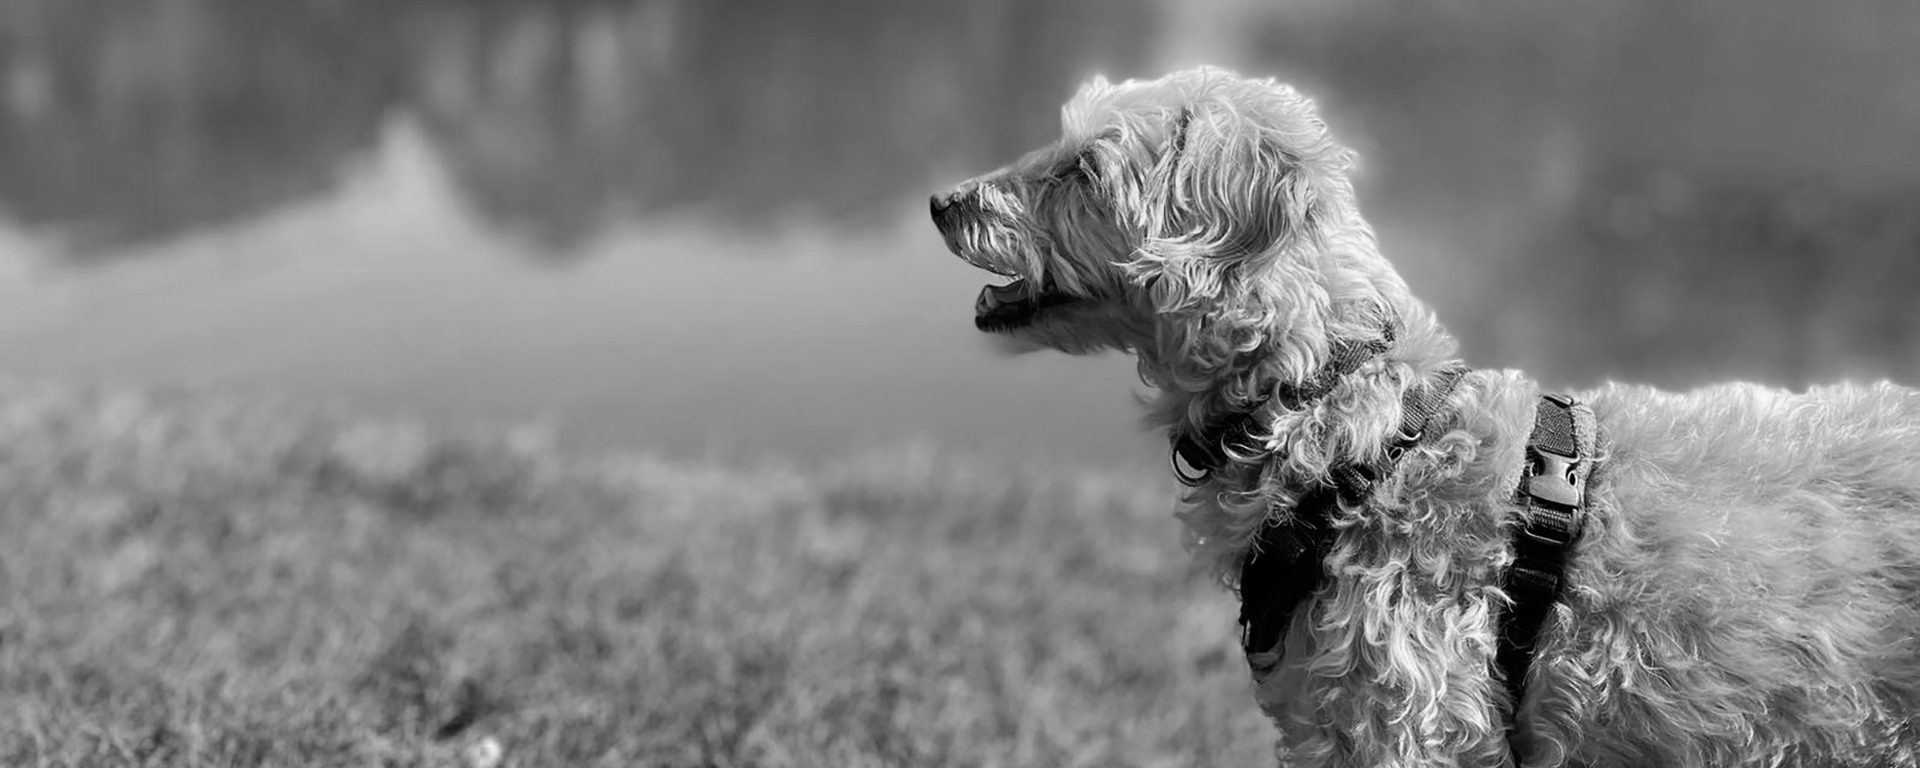 Essex-Dog-Training-Pet-Dog-Obedience-Header